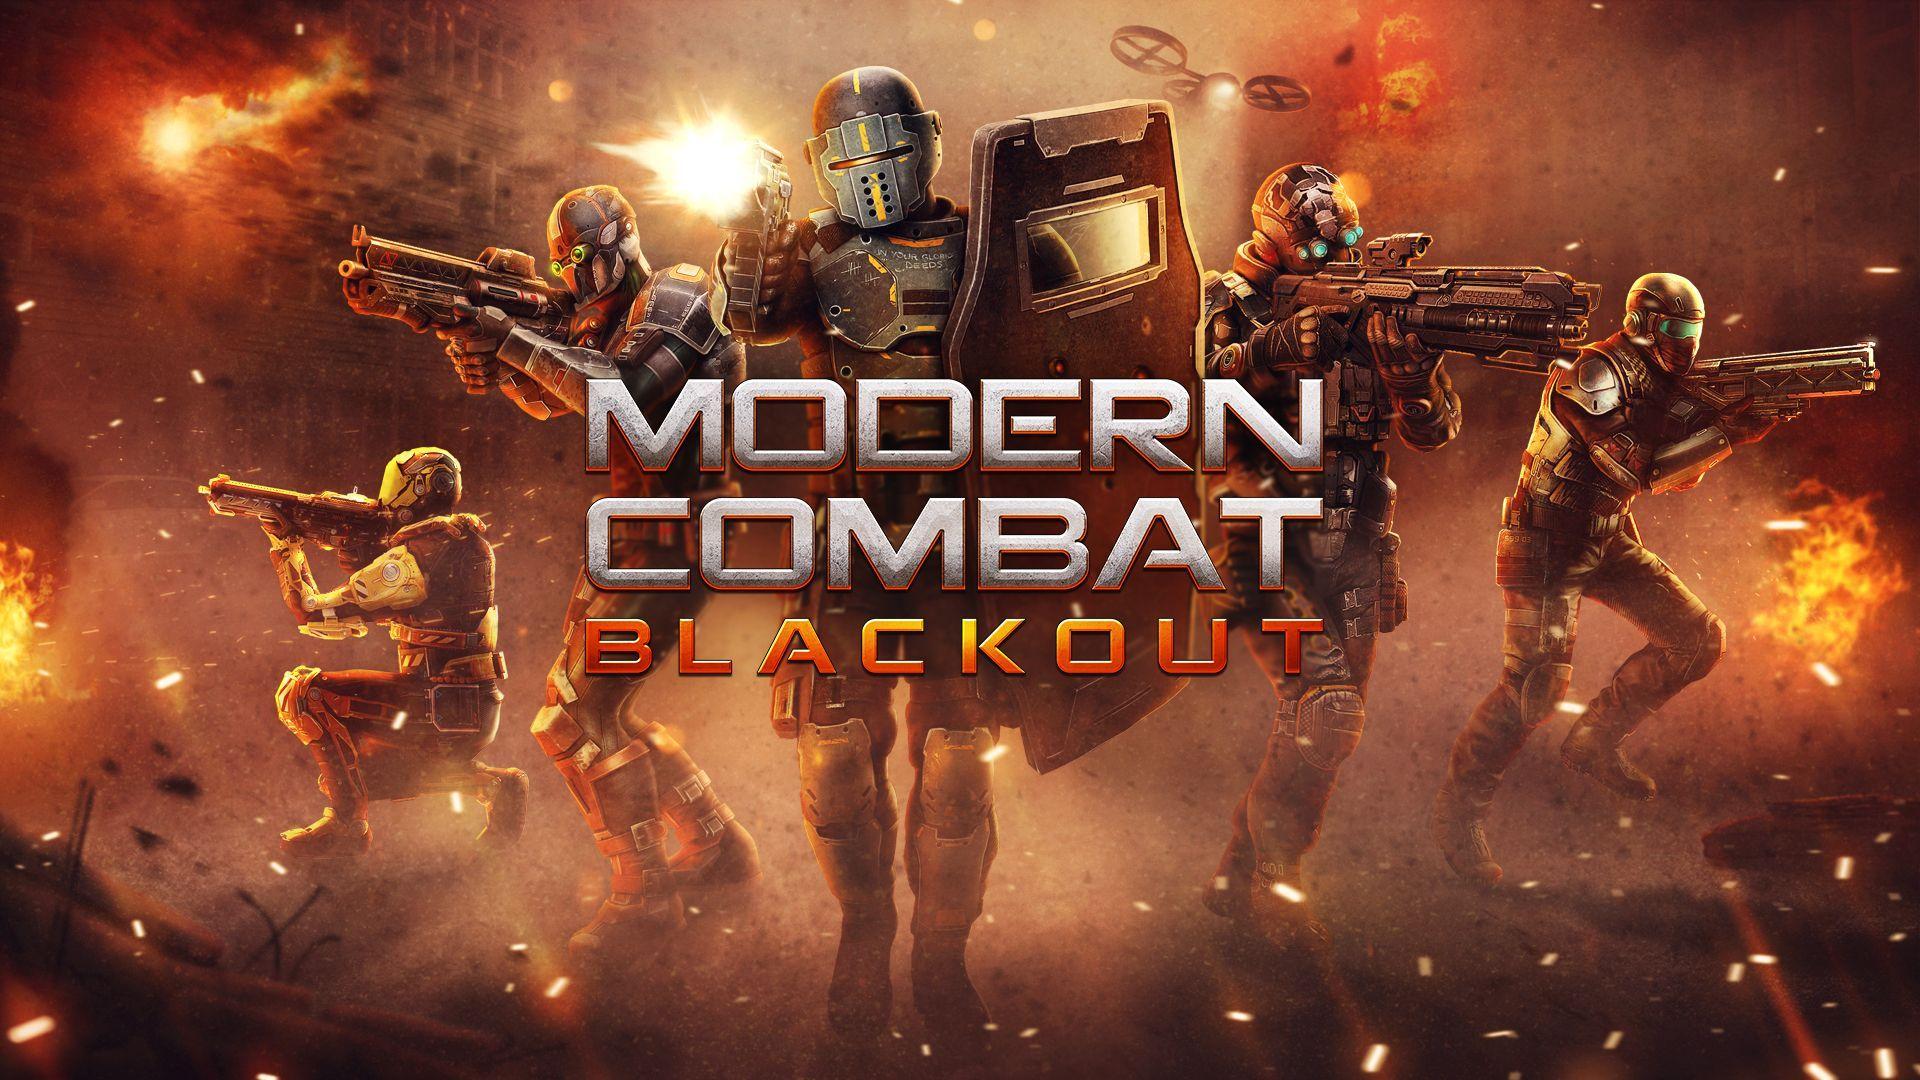 Modern Combat 5: Blackout free